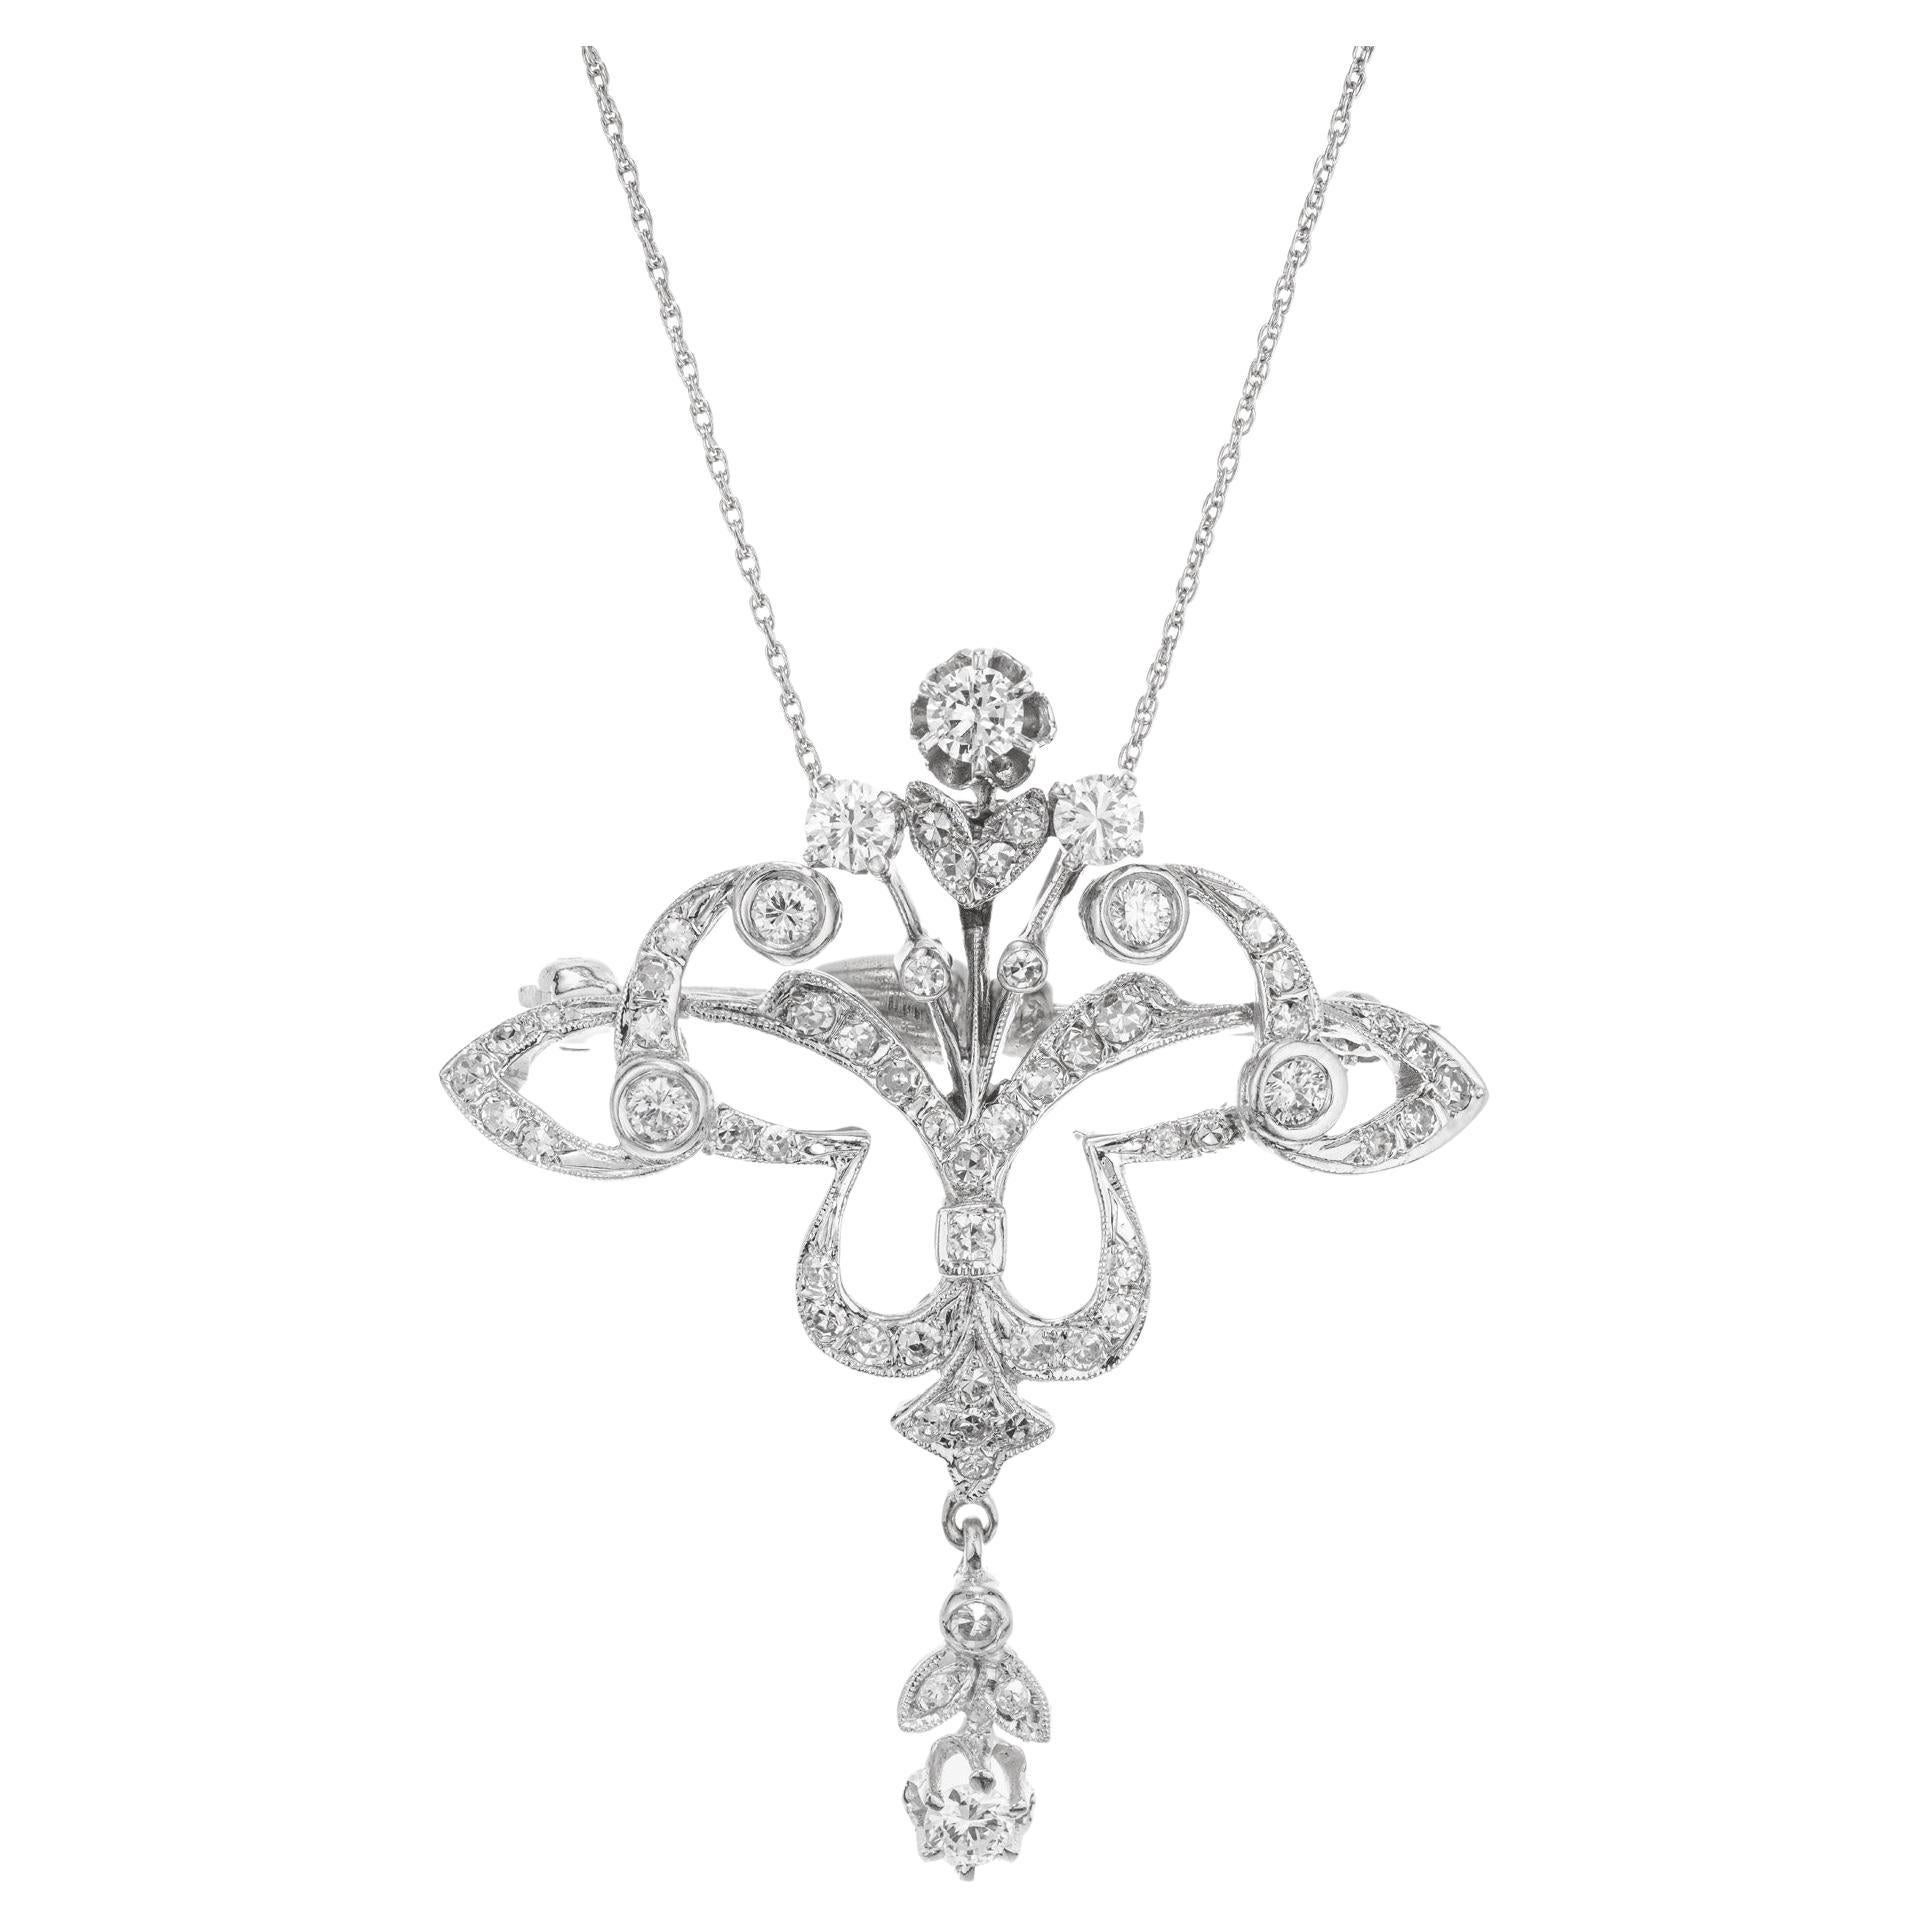 1.46 Carat Diamond White Gold Brooch Pendant Necklace